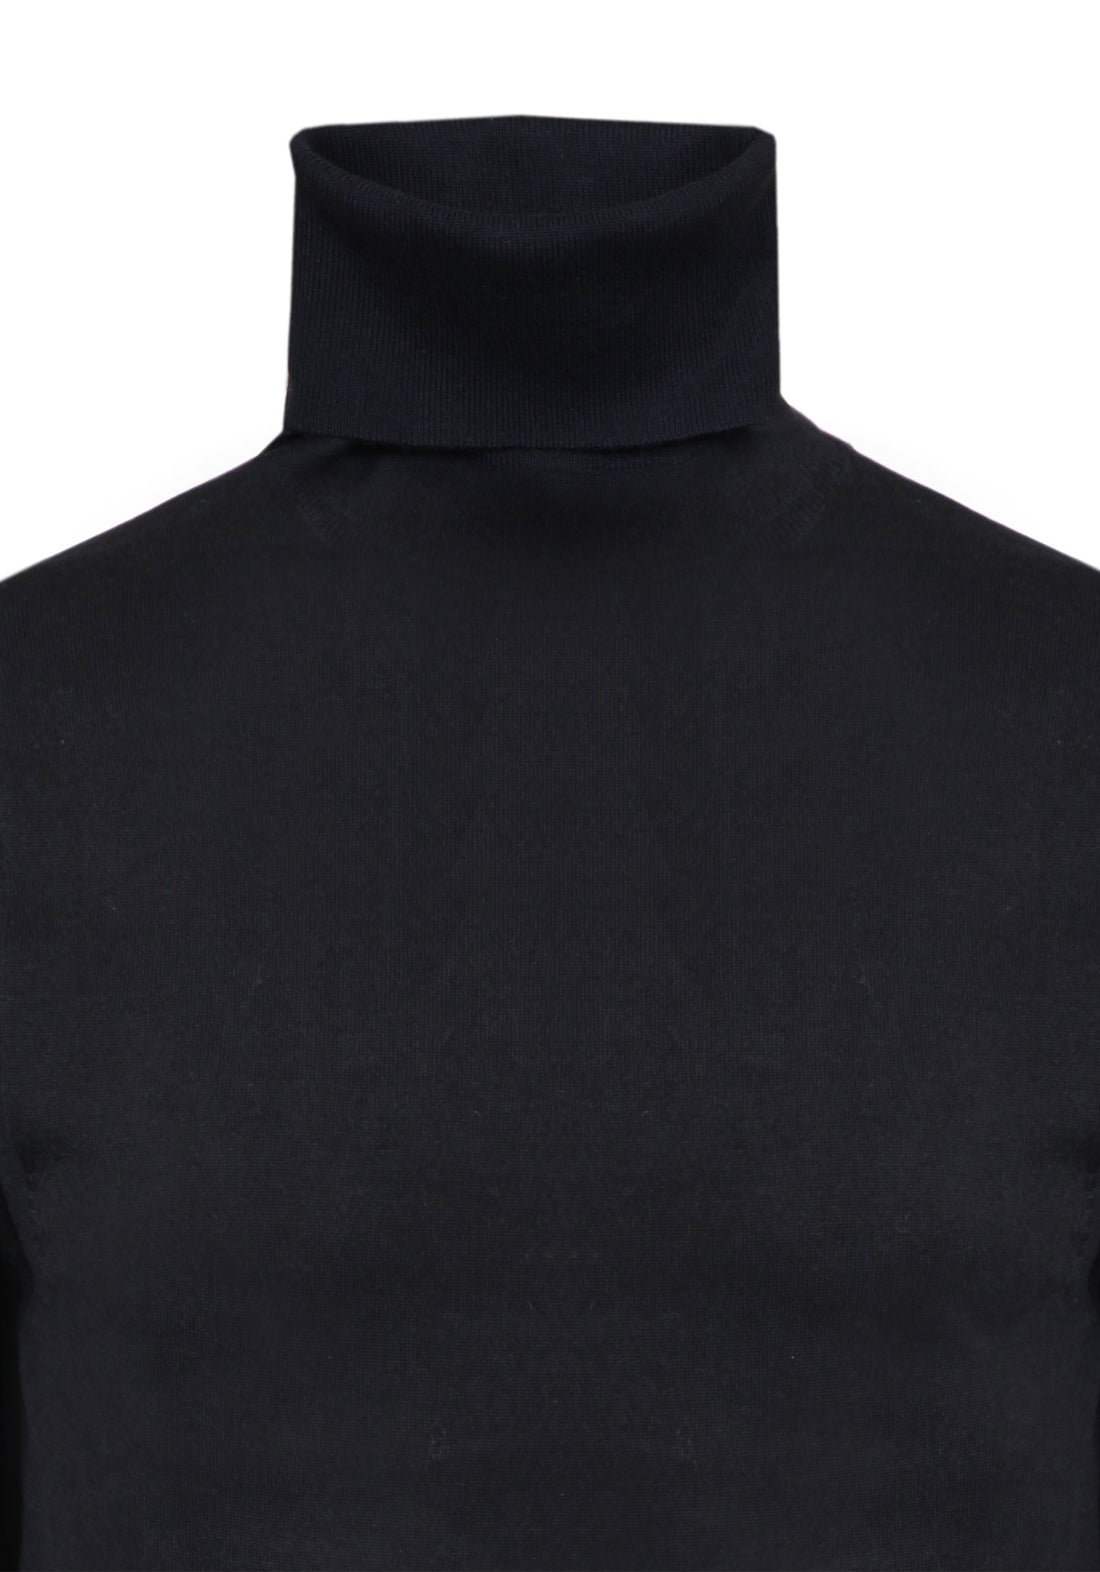 High Neck Sweater in Viscose Wool -Black-